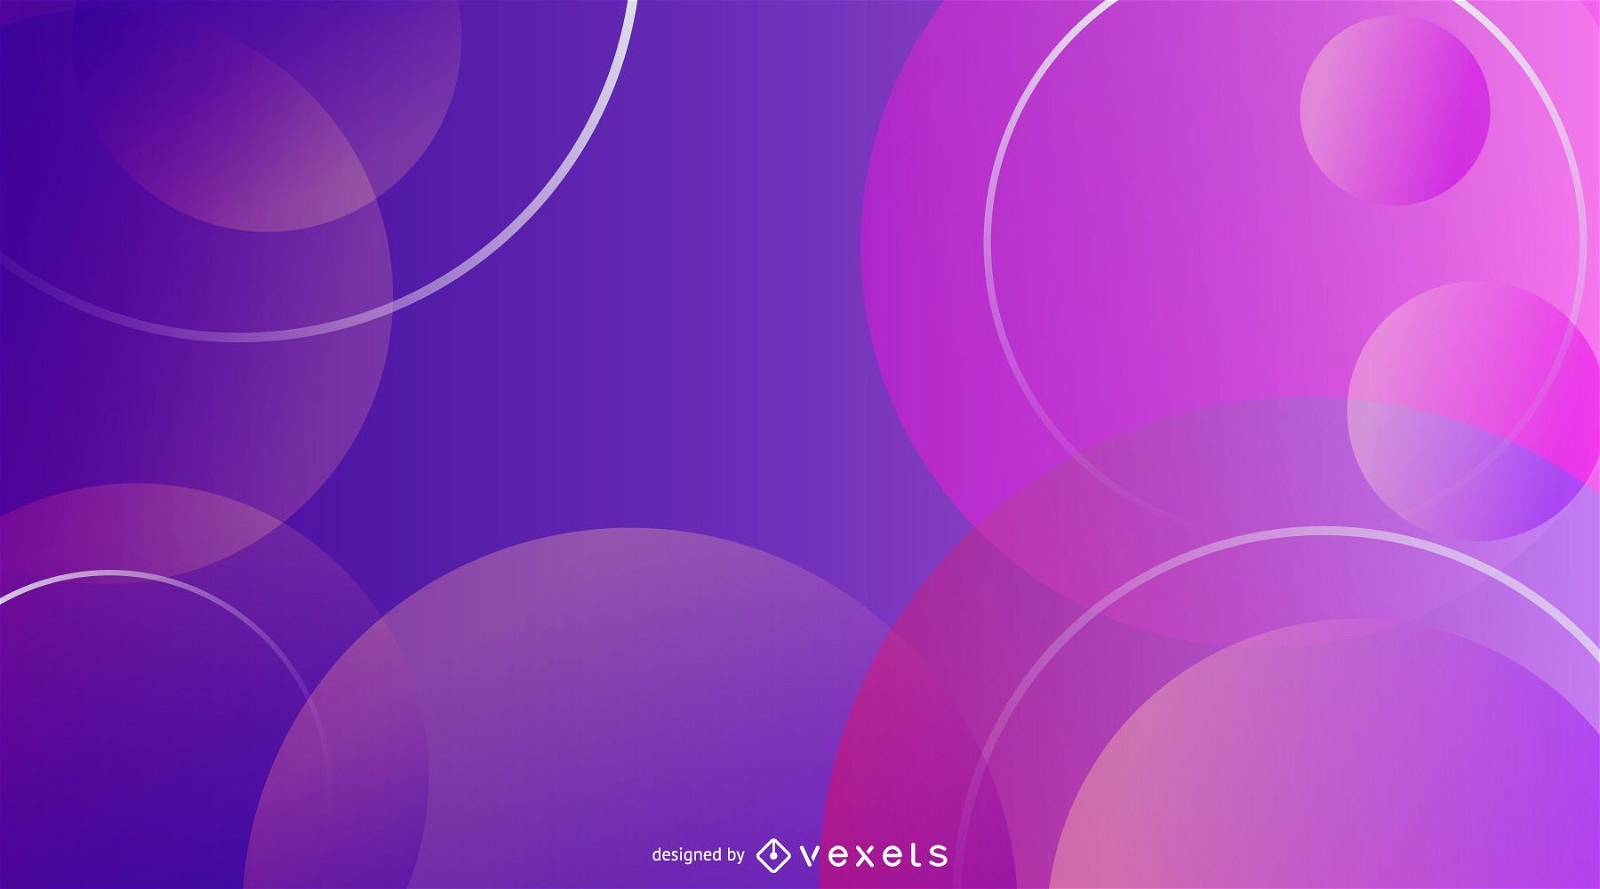 Abstraktes lila Farbverlauf-Hintergrunddesign